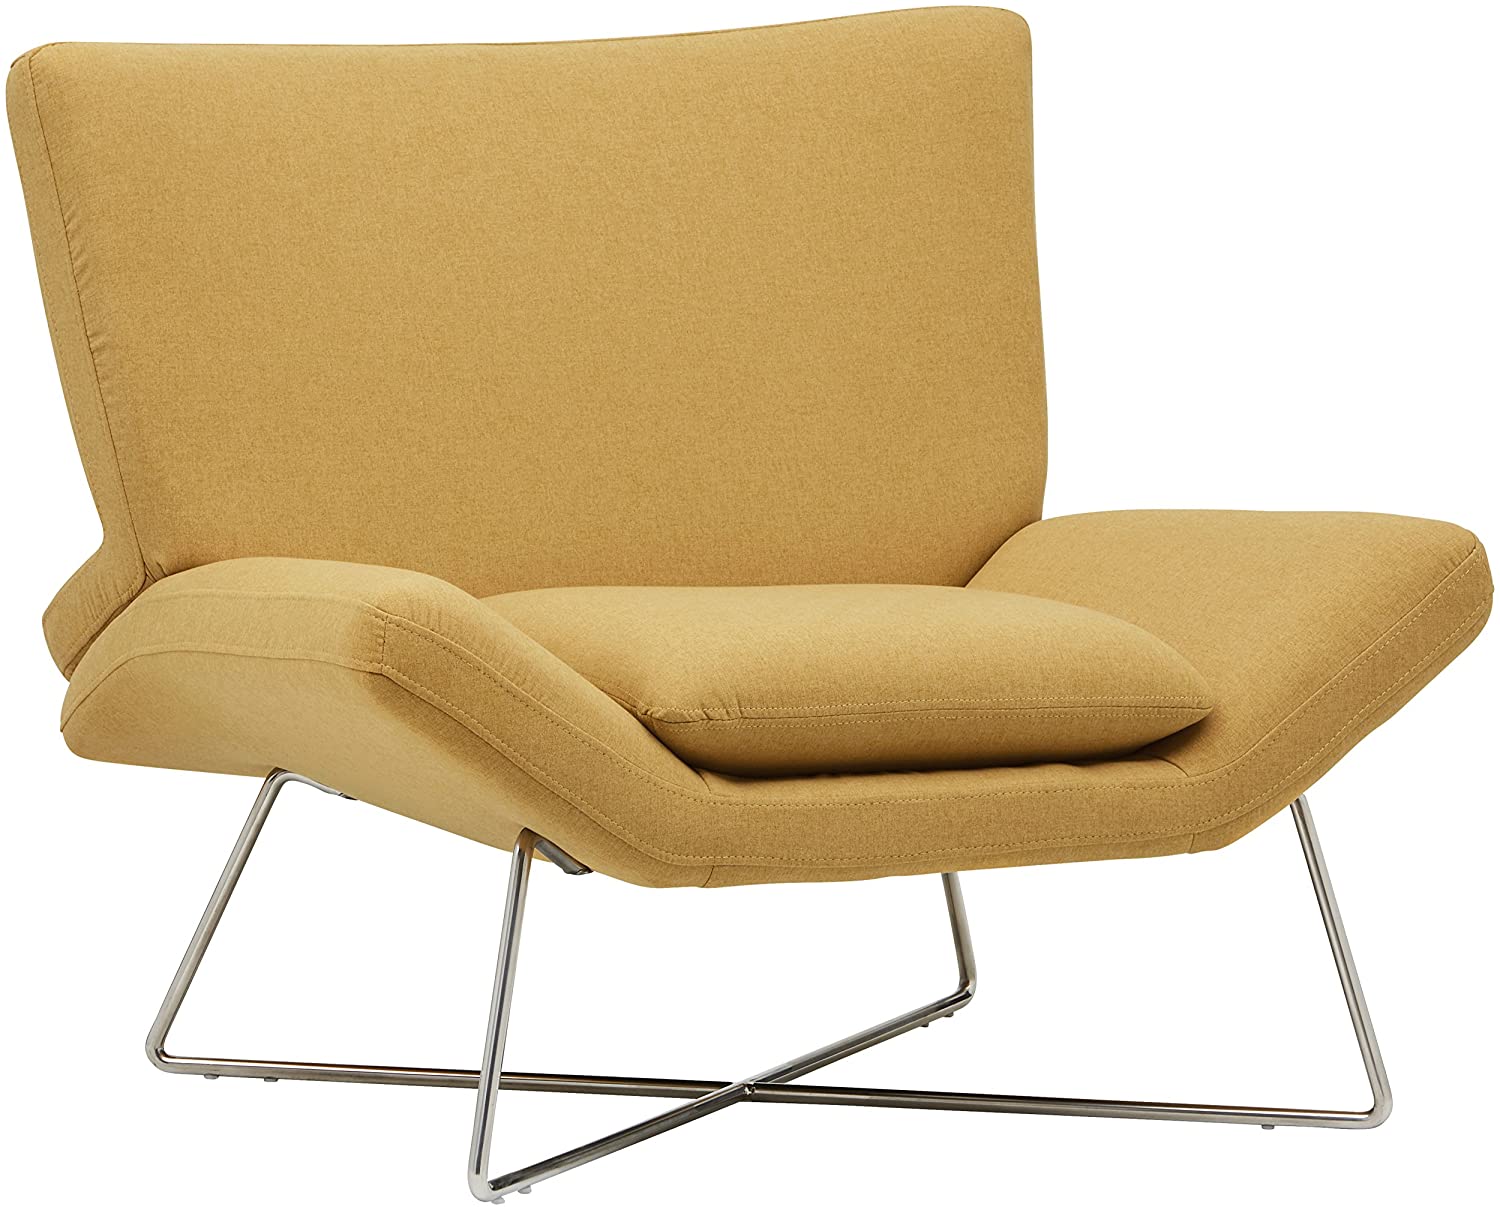 1 Seater Sofa Set: Canary,Aqua,Grey Sofa Set